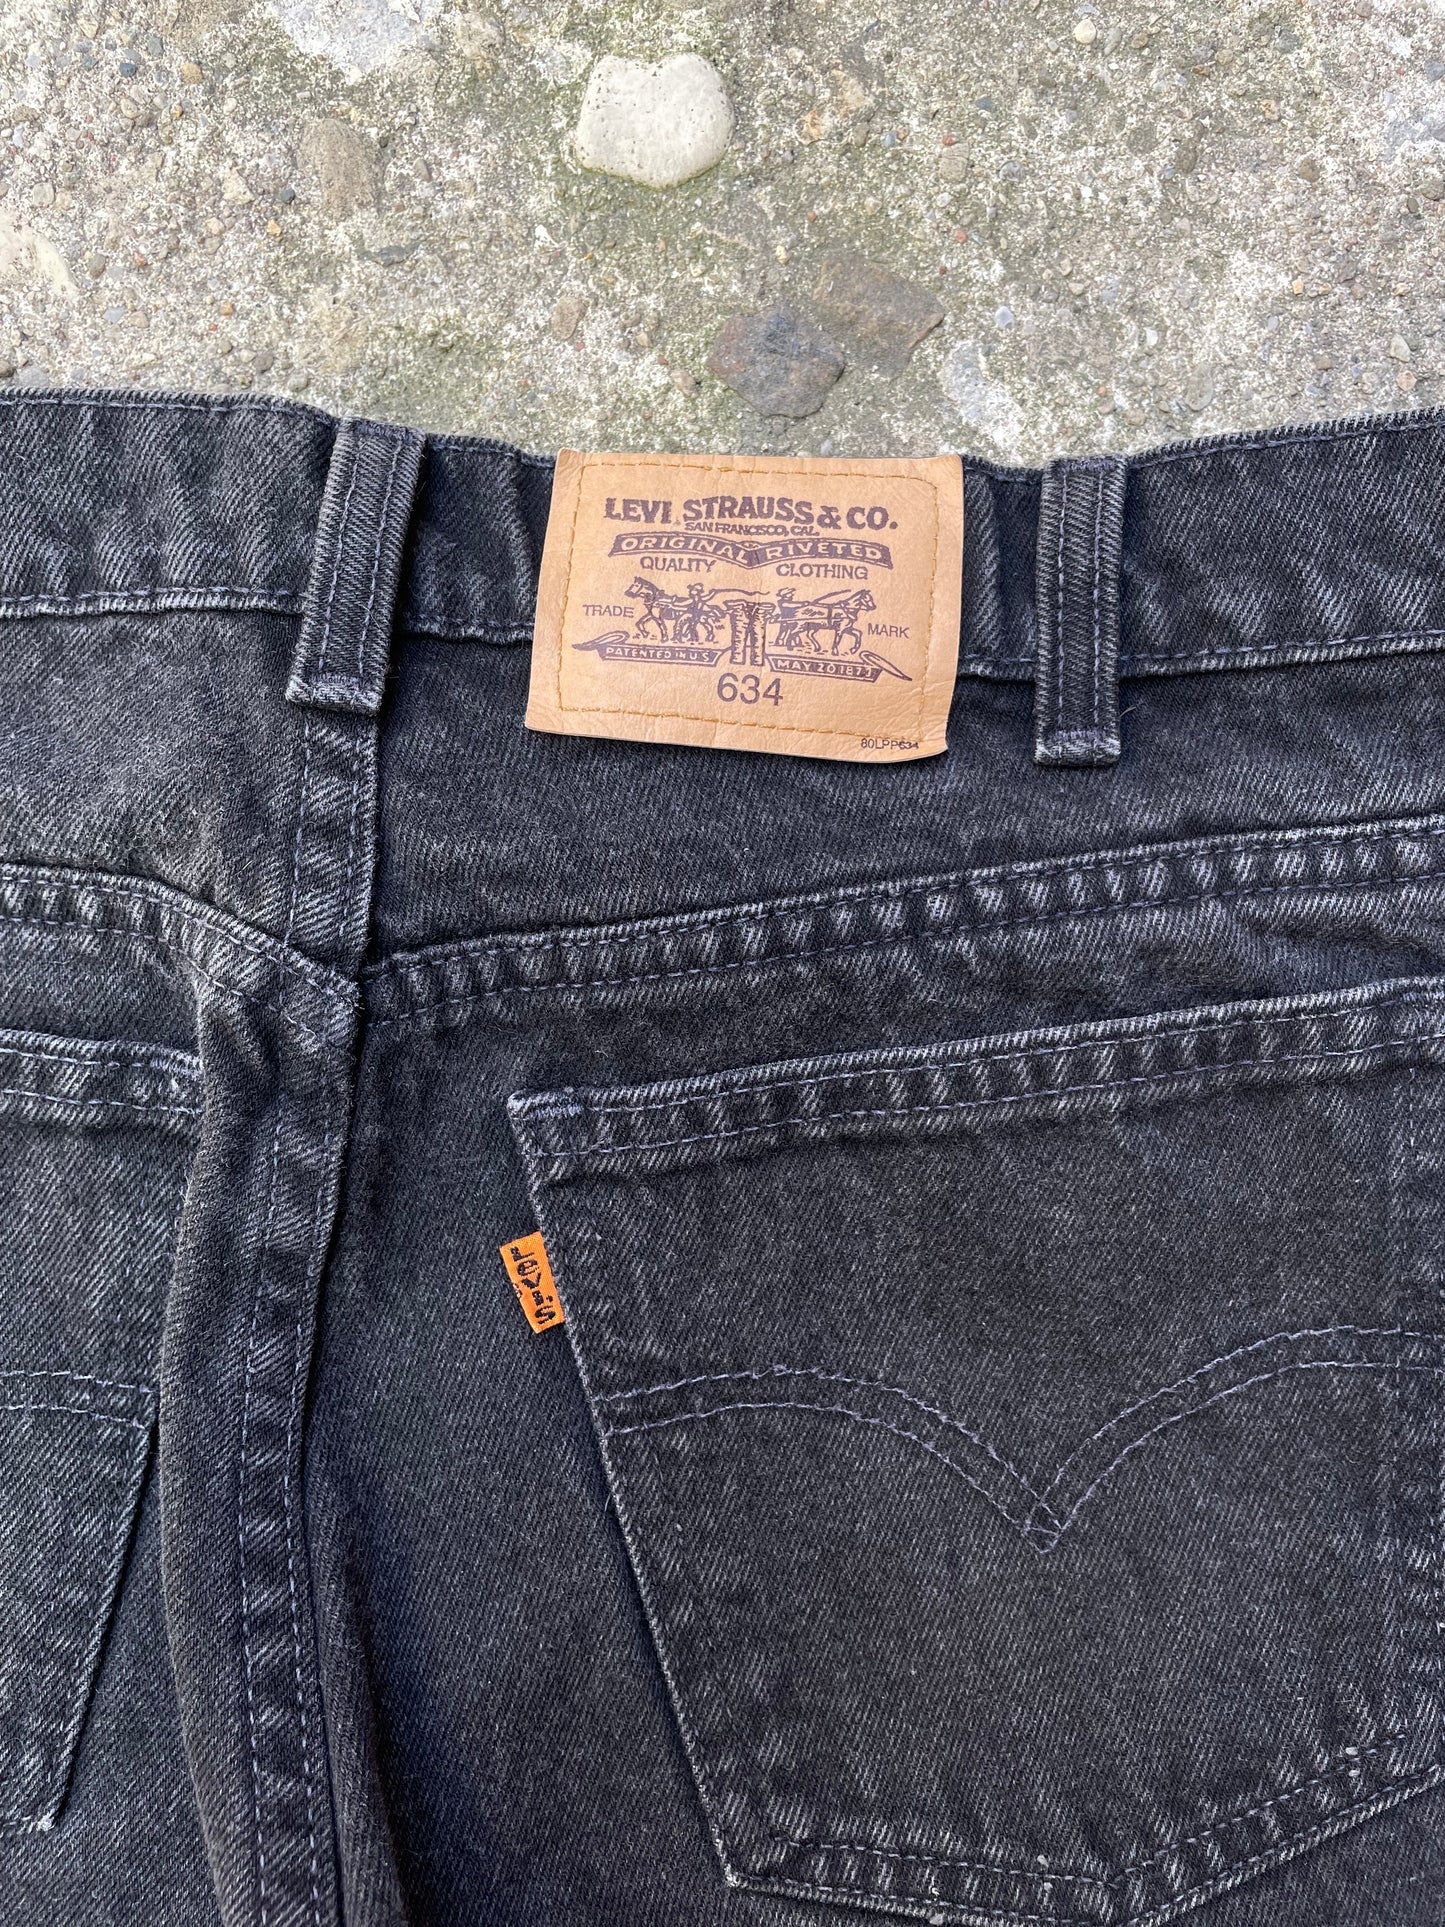 1990's Levi's 634 Orange Tab Black Denim Jeans - 32